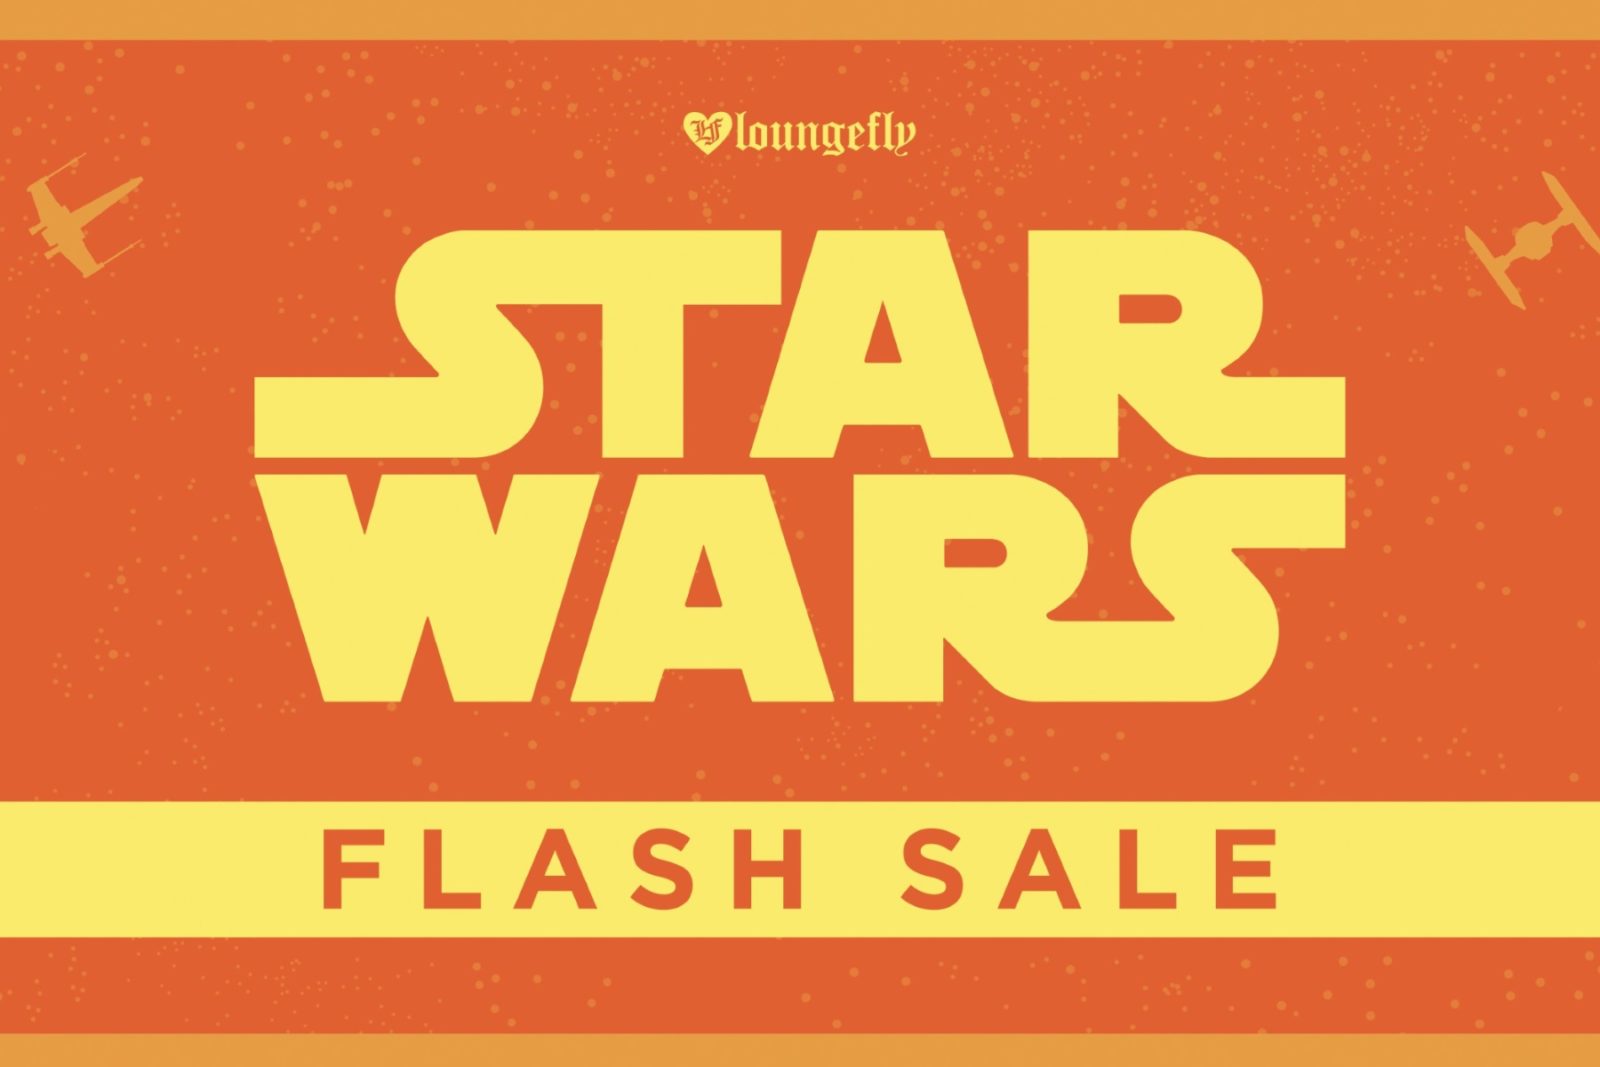 Loungefly x Star Wars The Last Jedi Flash Sale